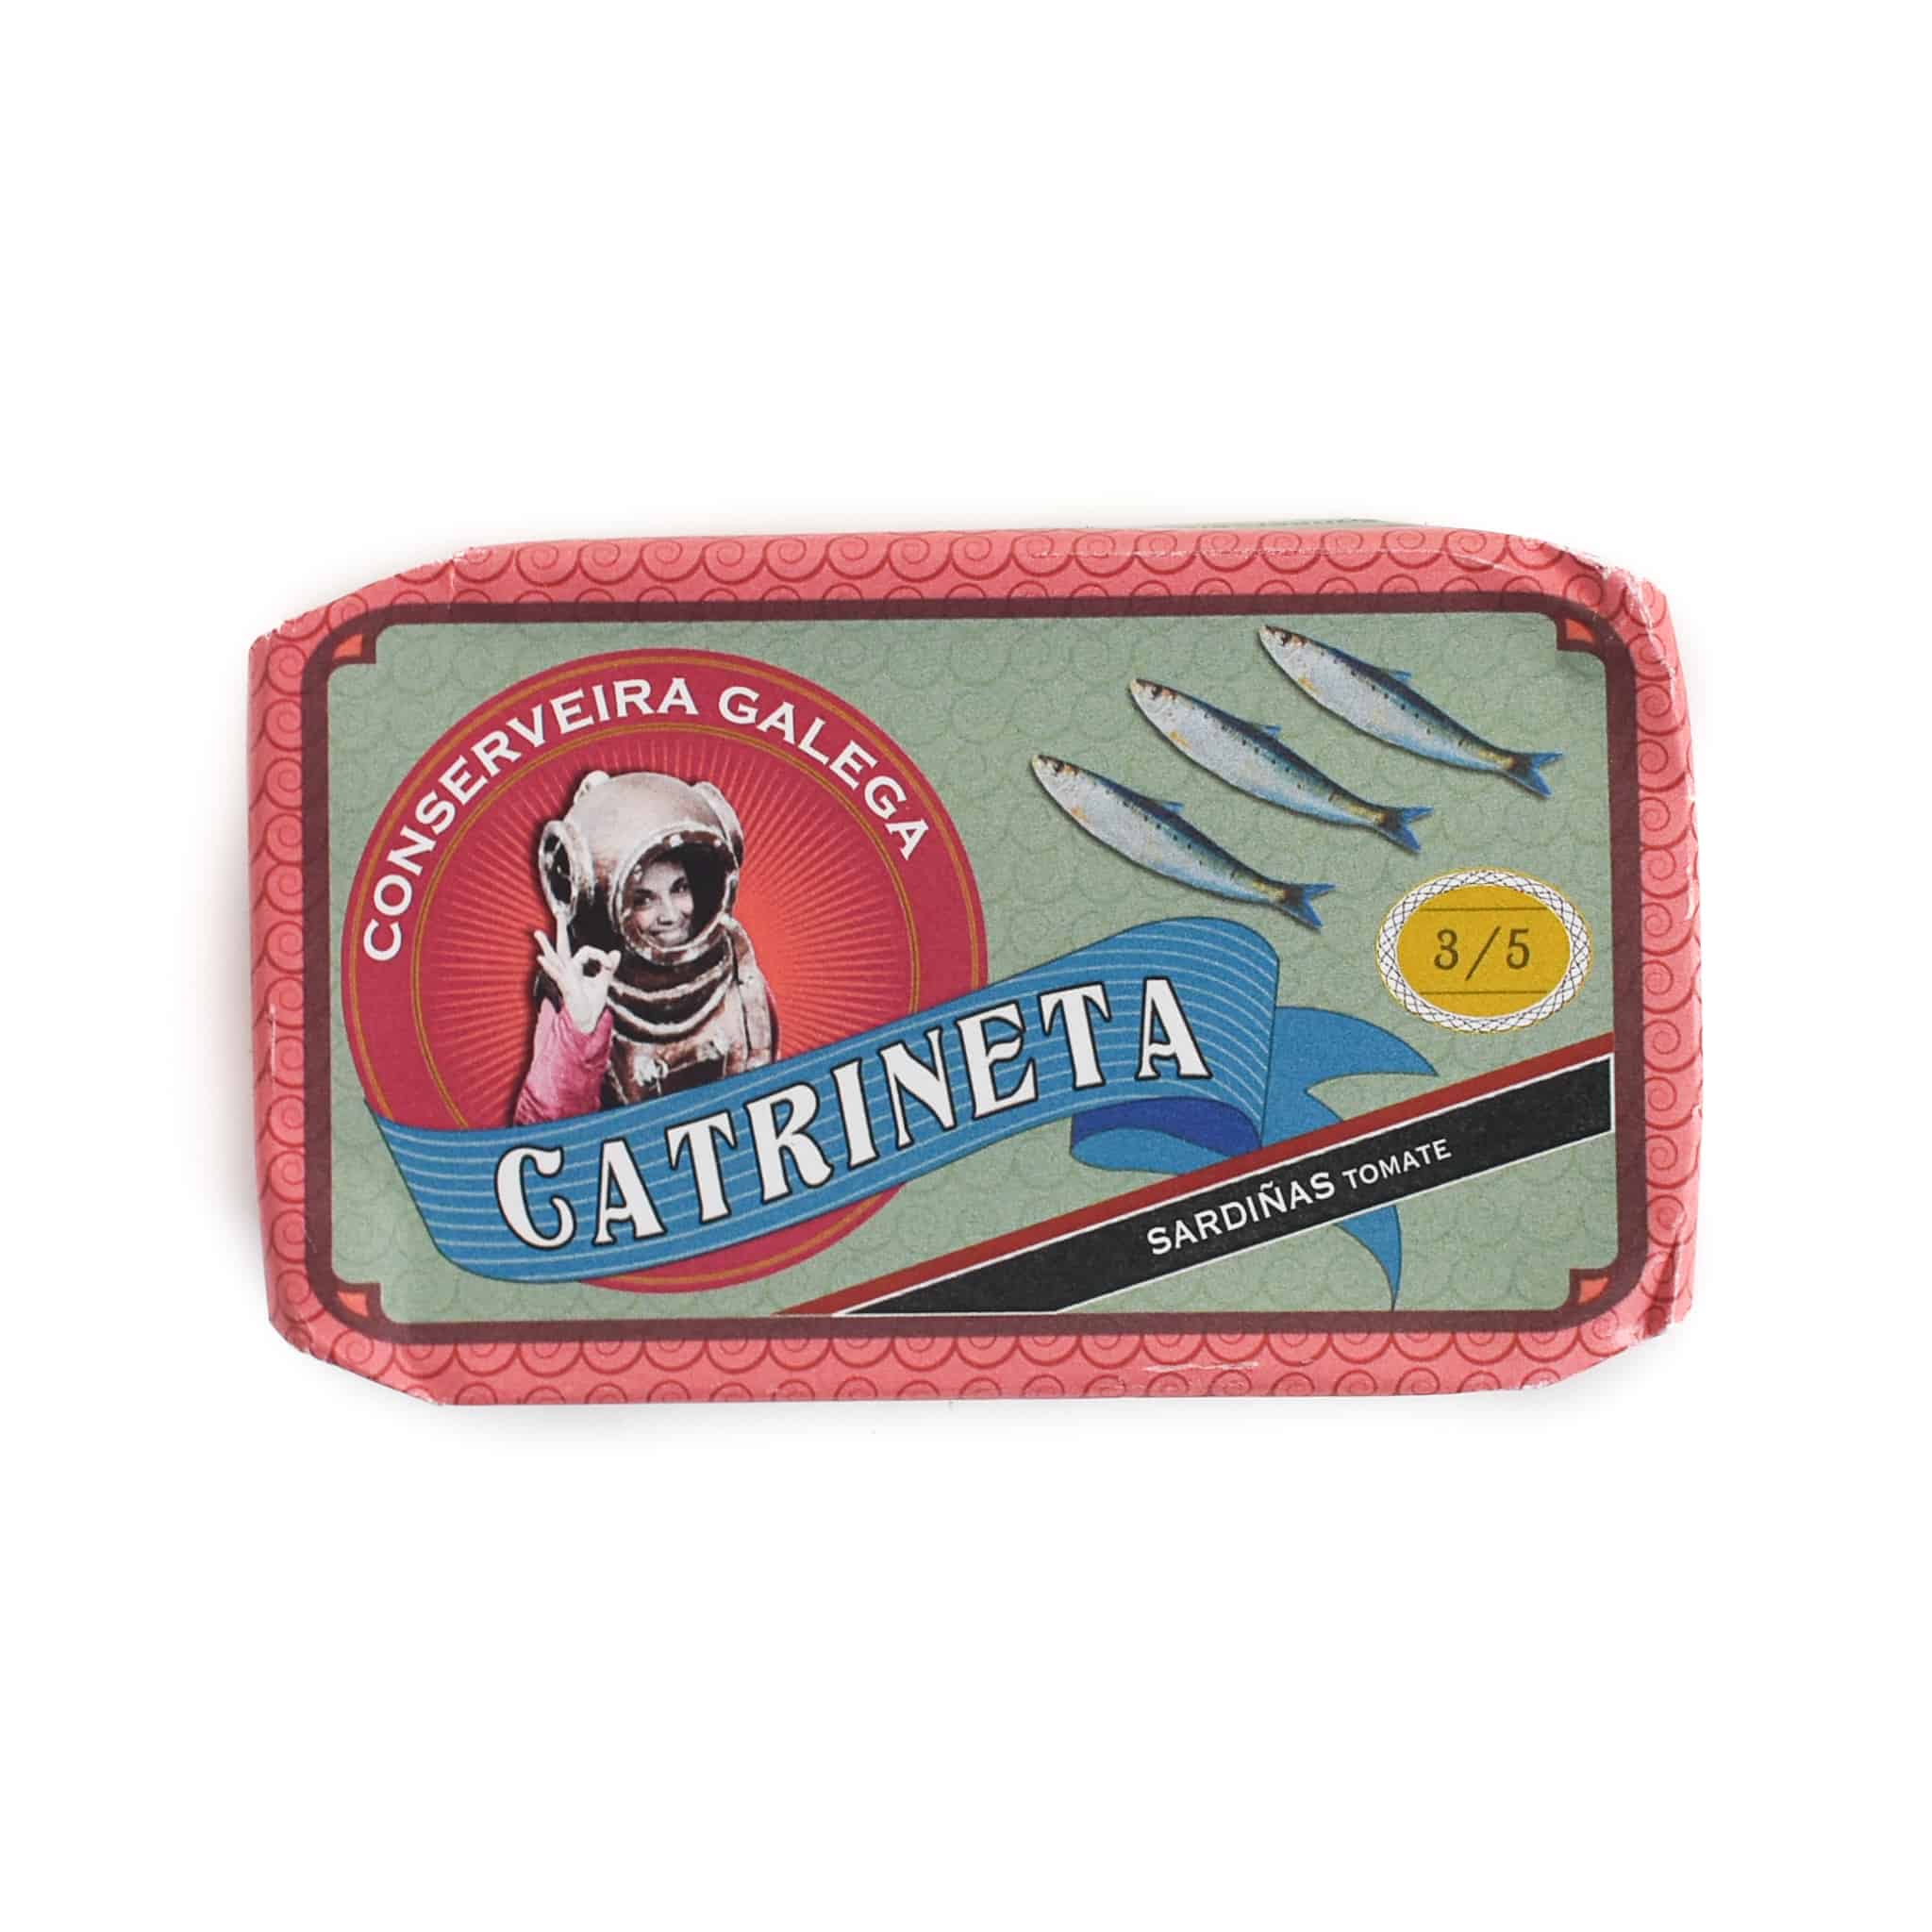 Catrineta Sardines in Tomato Sauce, 115g